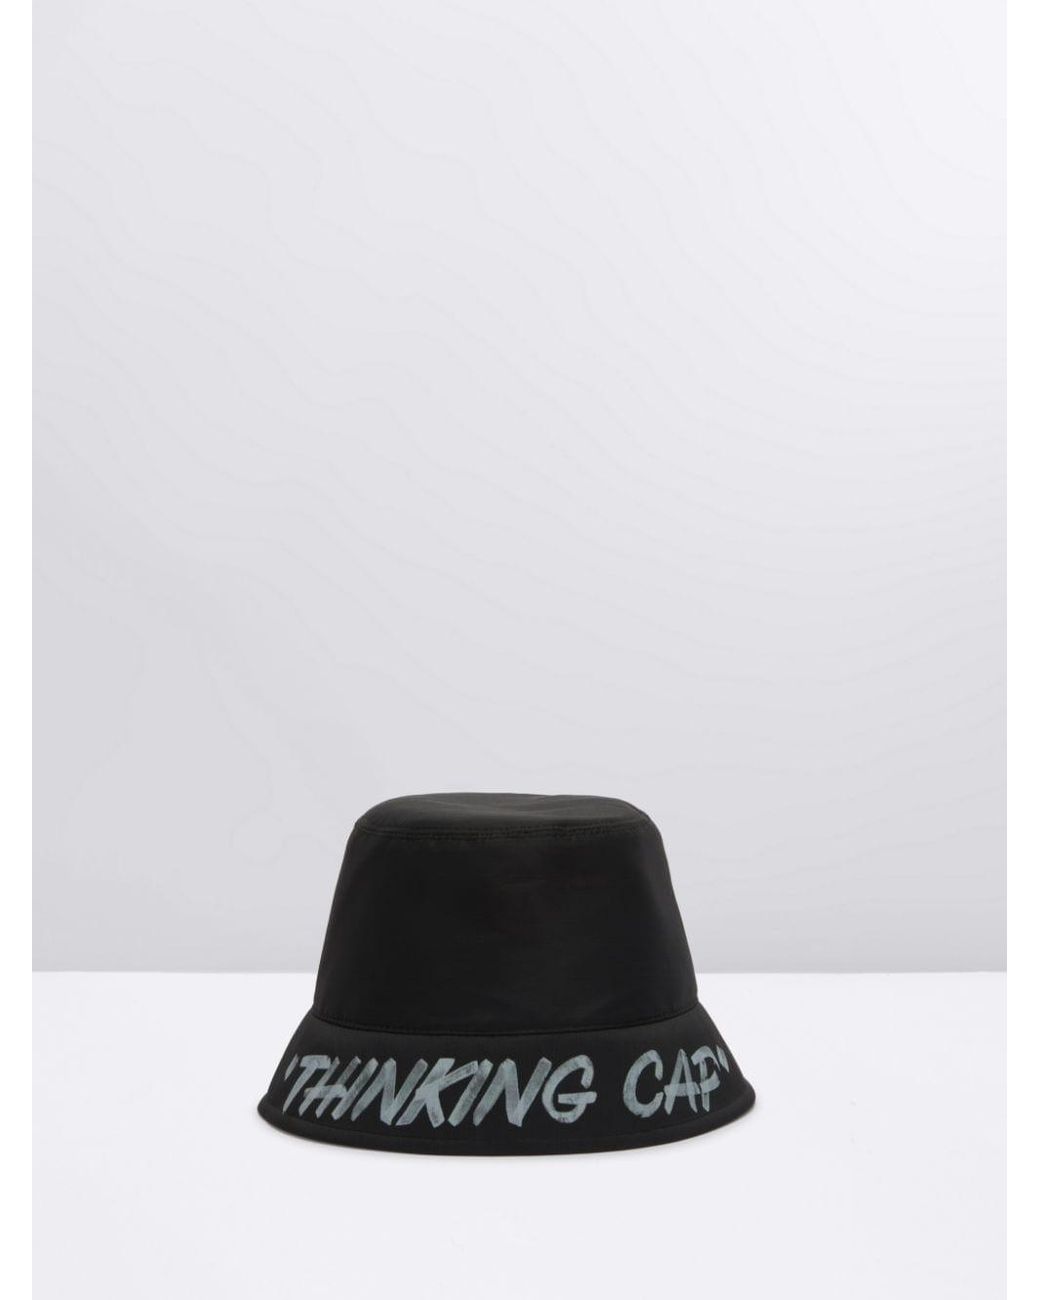 Off-White c/o Virgil Abloh Thinking Cap Bucket Hat in Black | Lyst